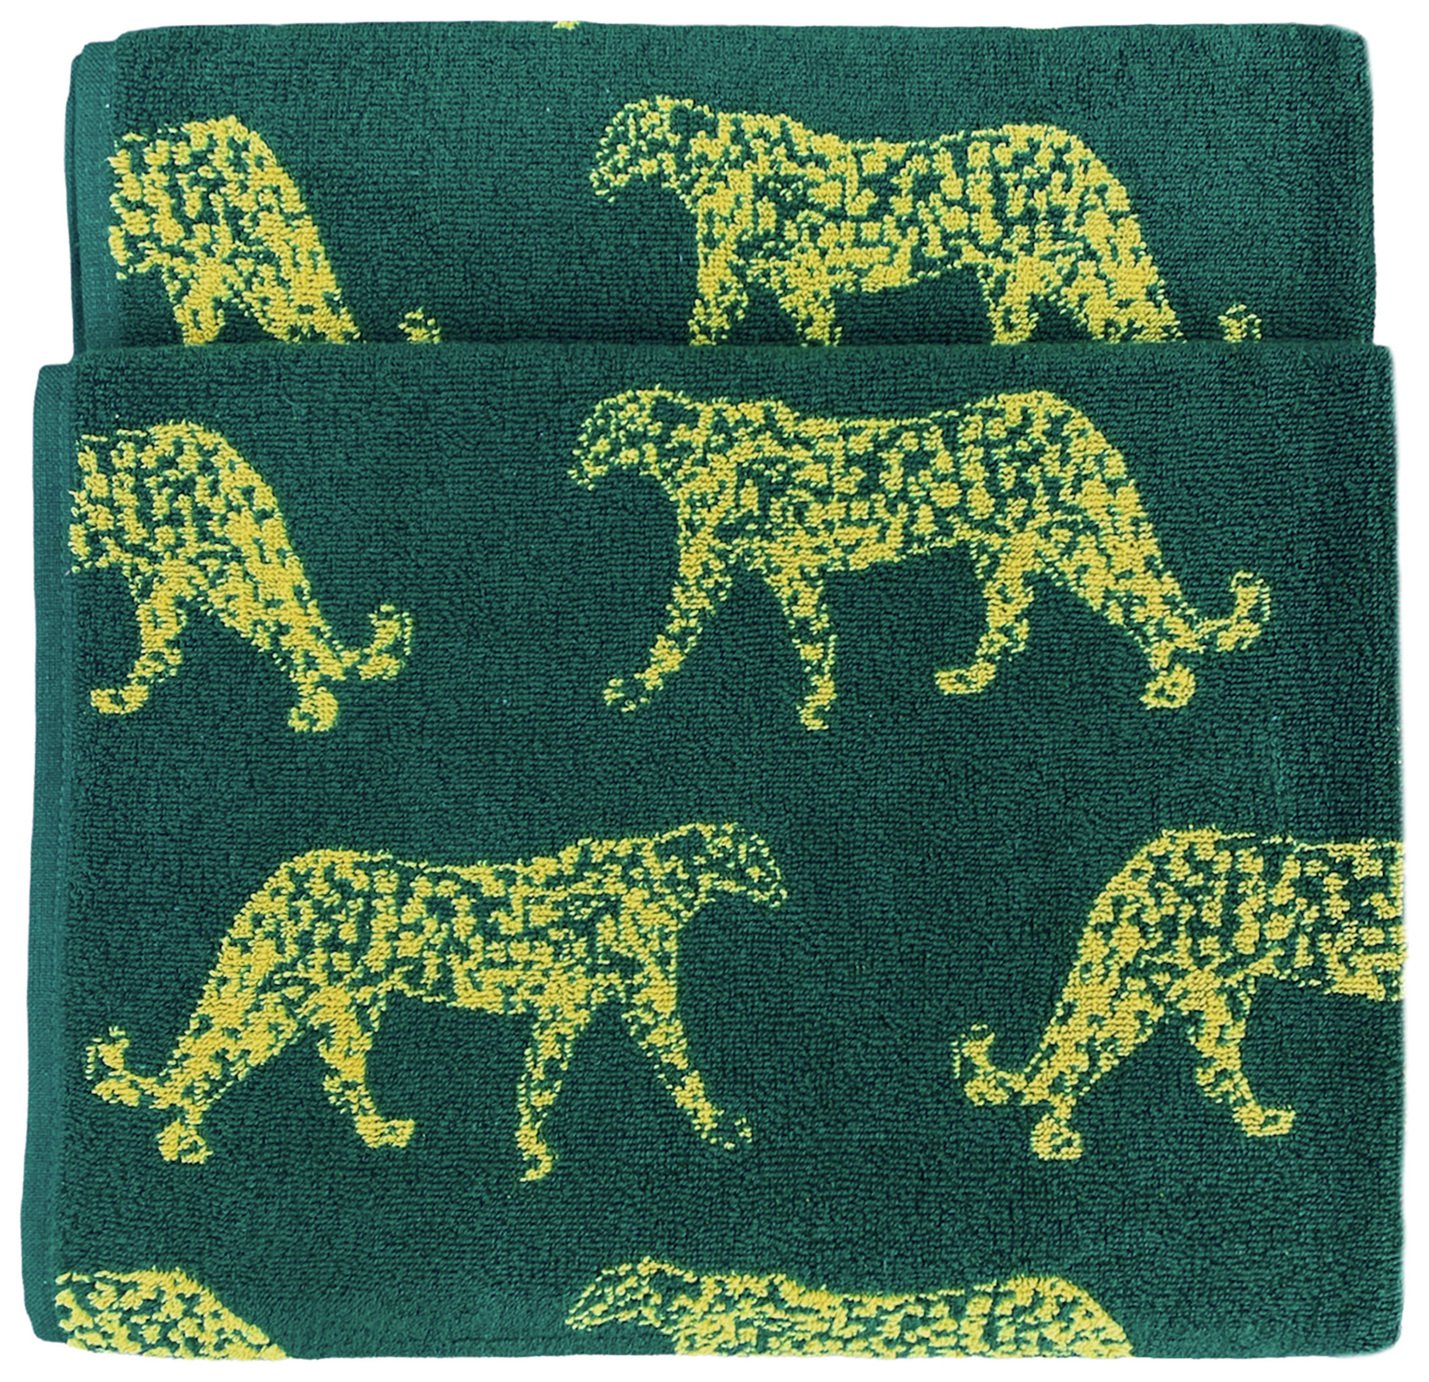 Furn Turkish Cotton Leopard Patterned Hand Towel -Teal Green